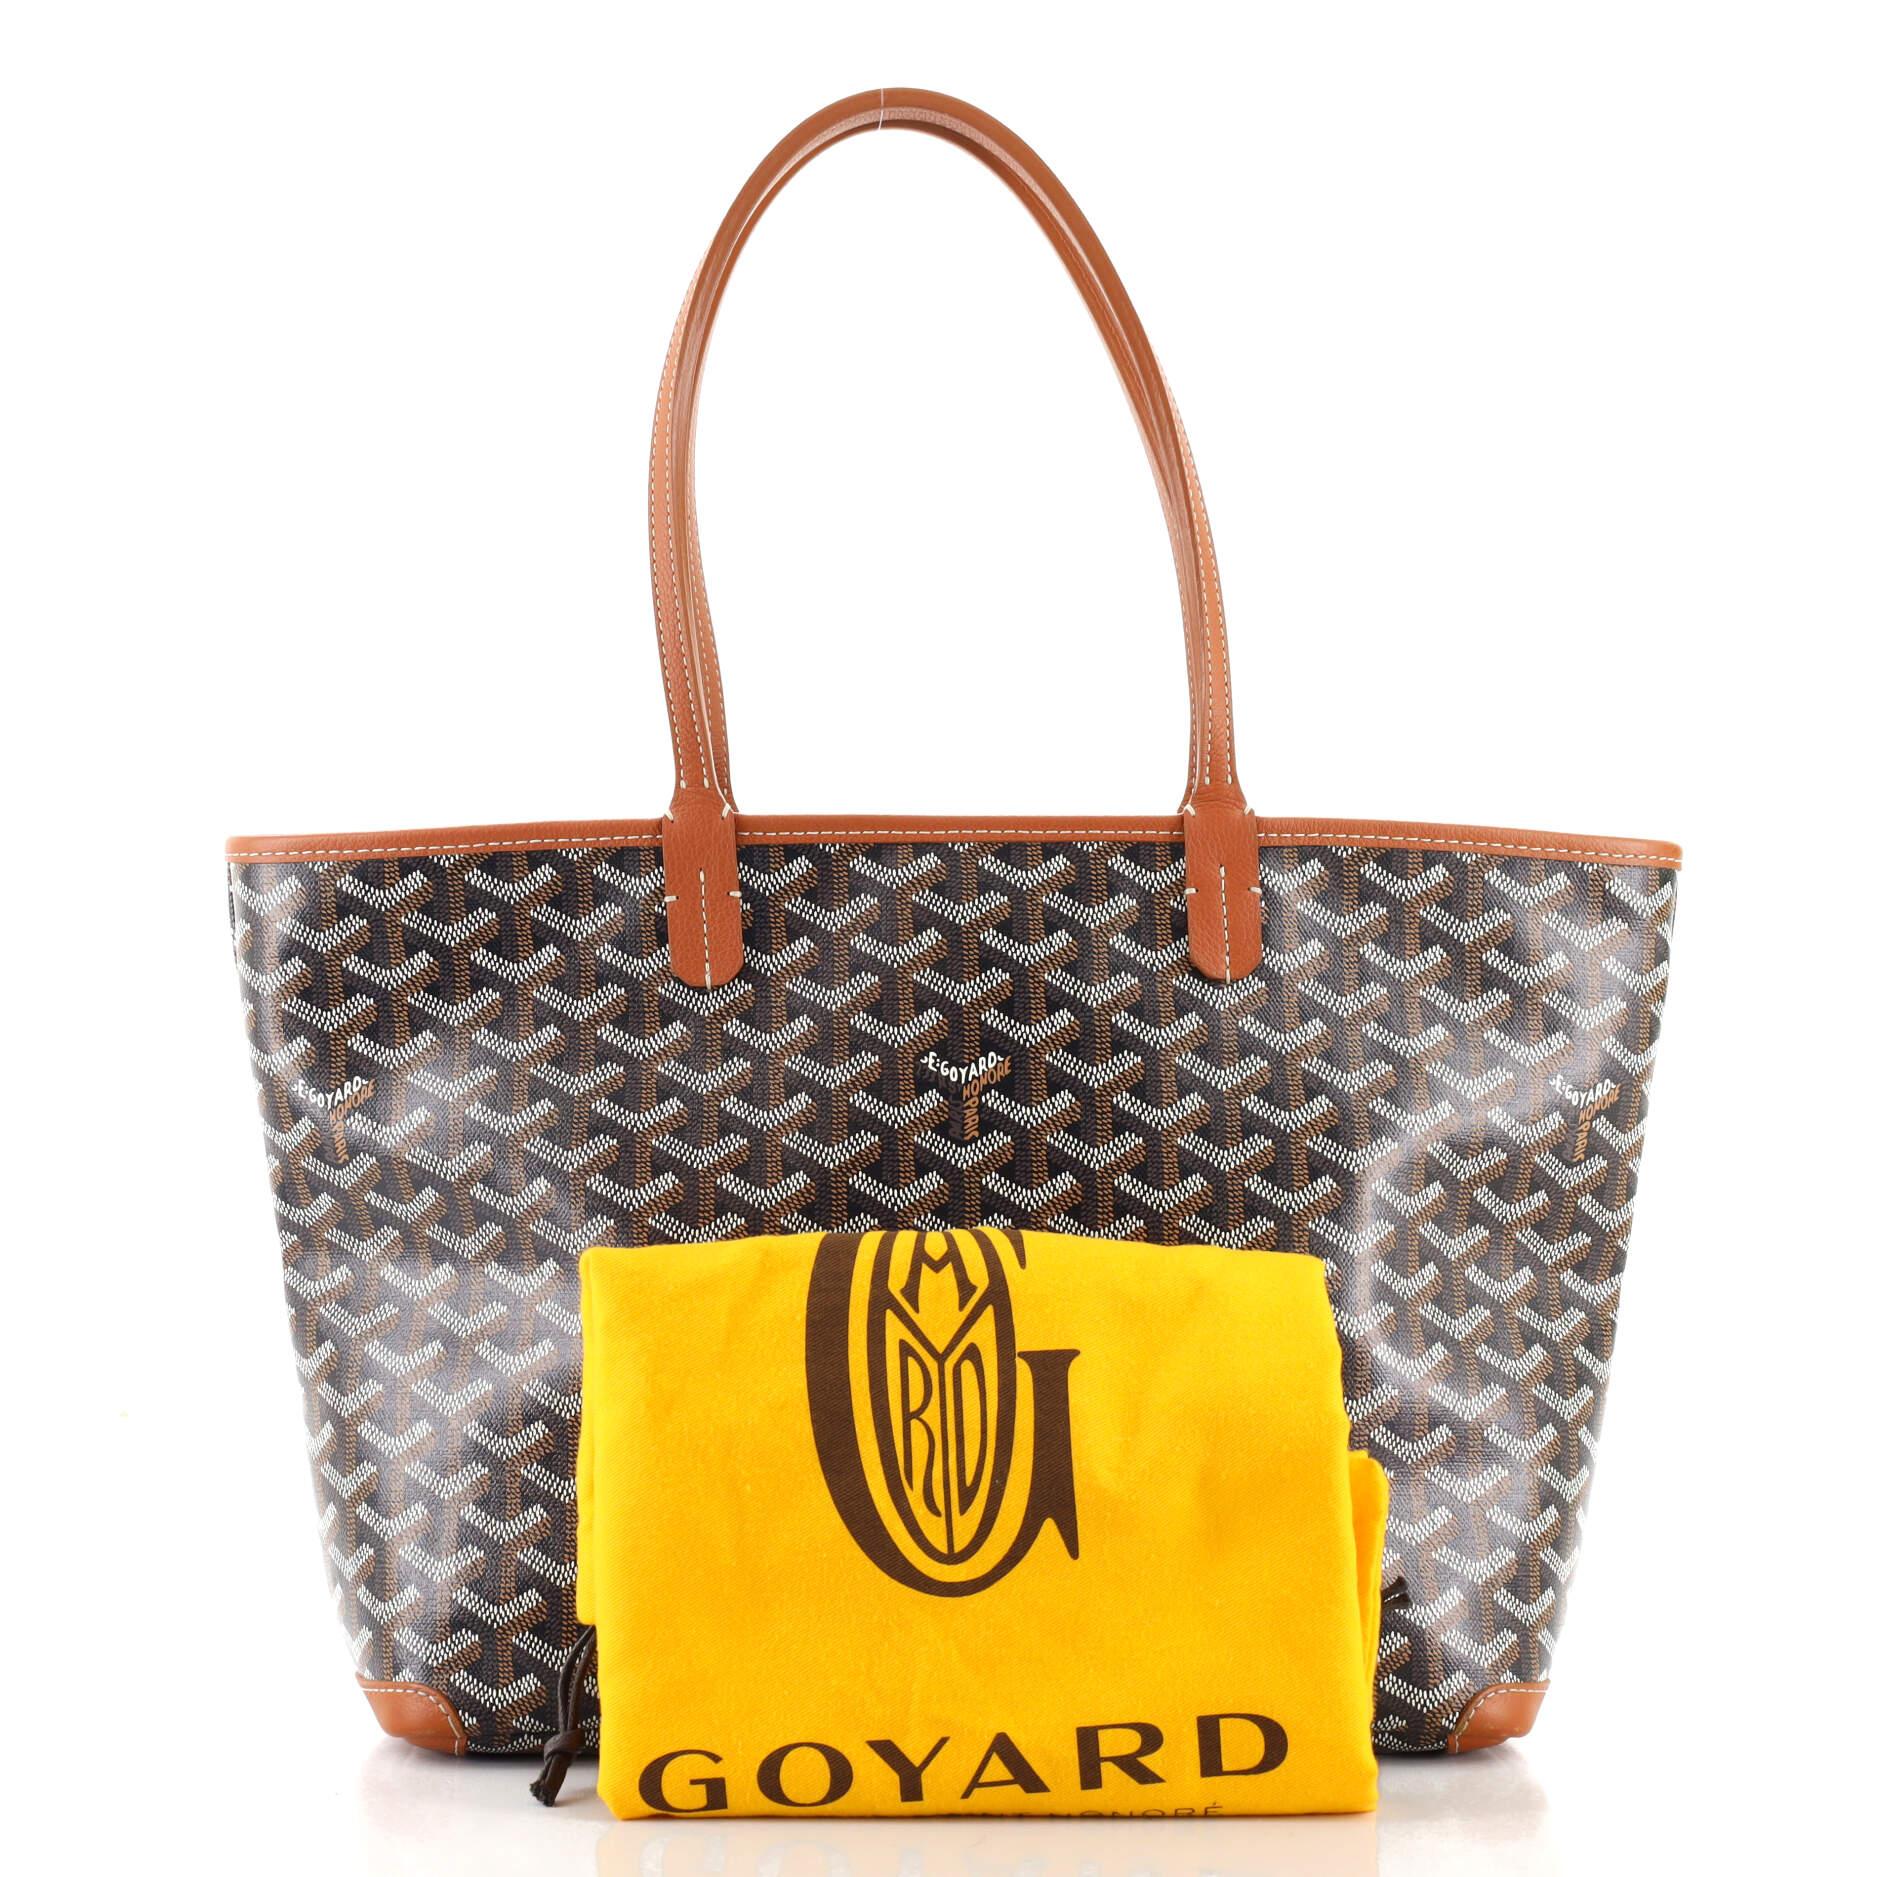 Goyard Artois Pm Bag - For Sale on 1stDibs  goyard artois pm vs mm, goyard  artois tote pm, artois pm bag price uk